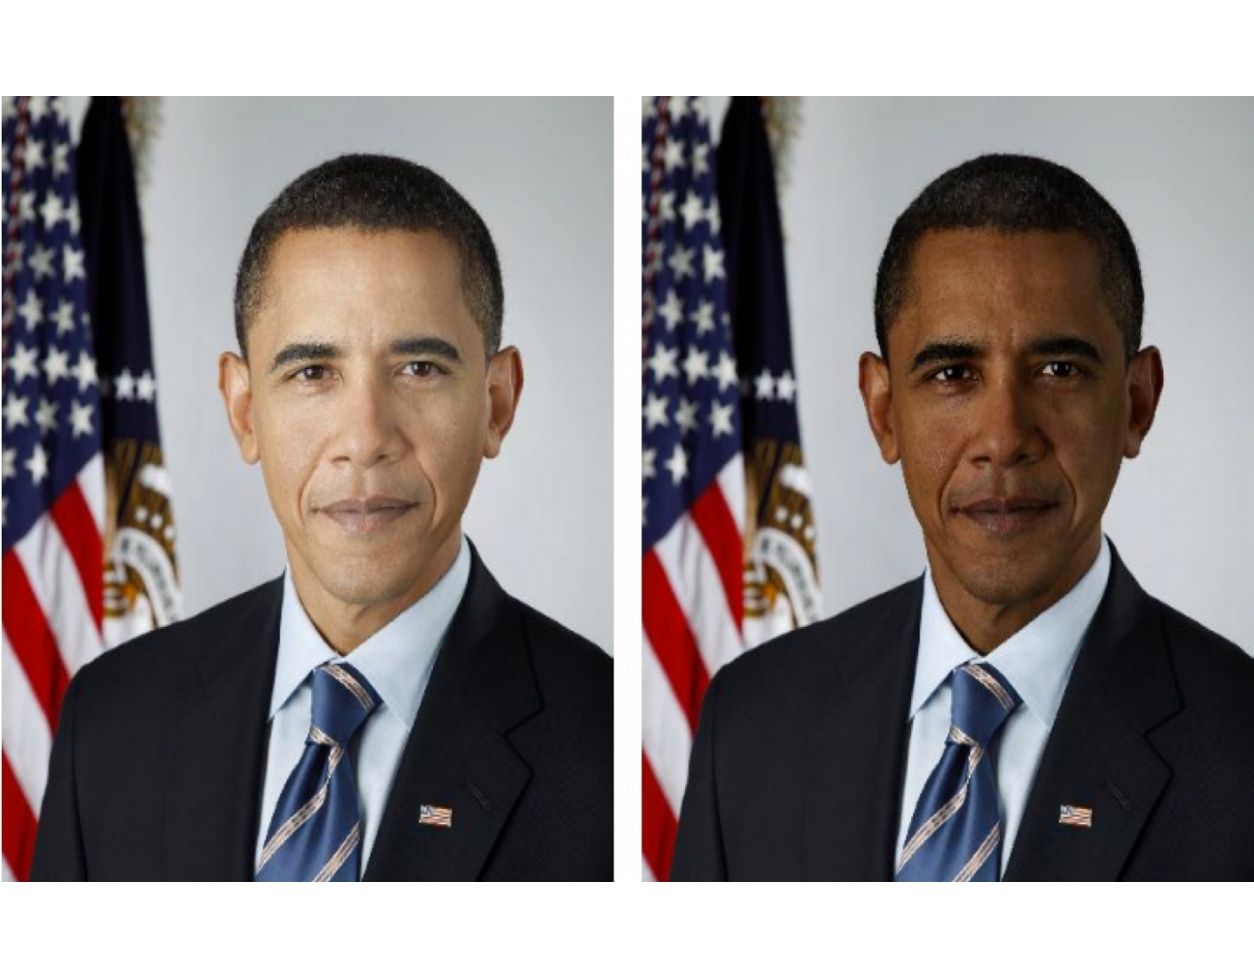 Obama skin change 